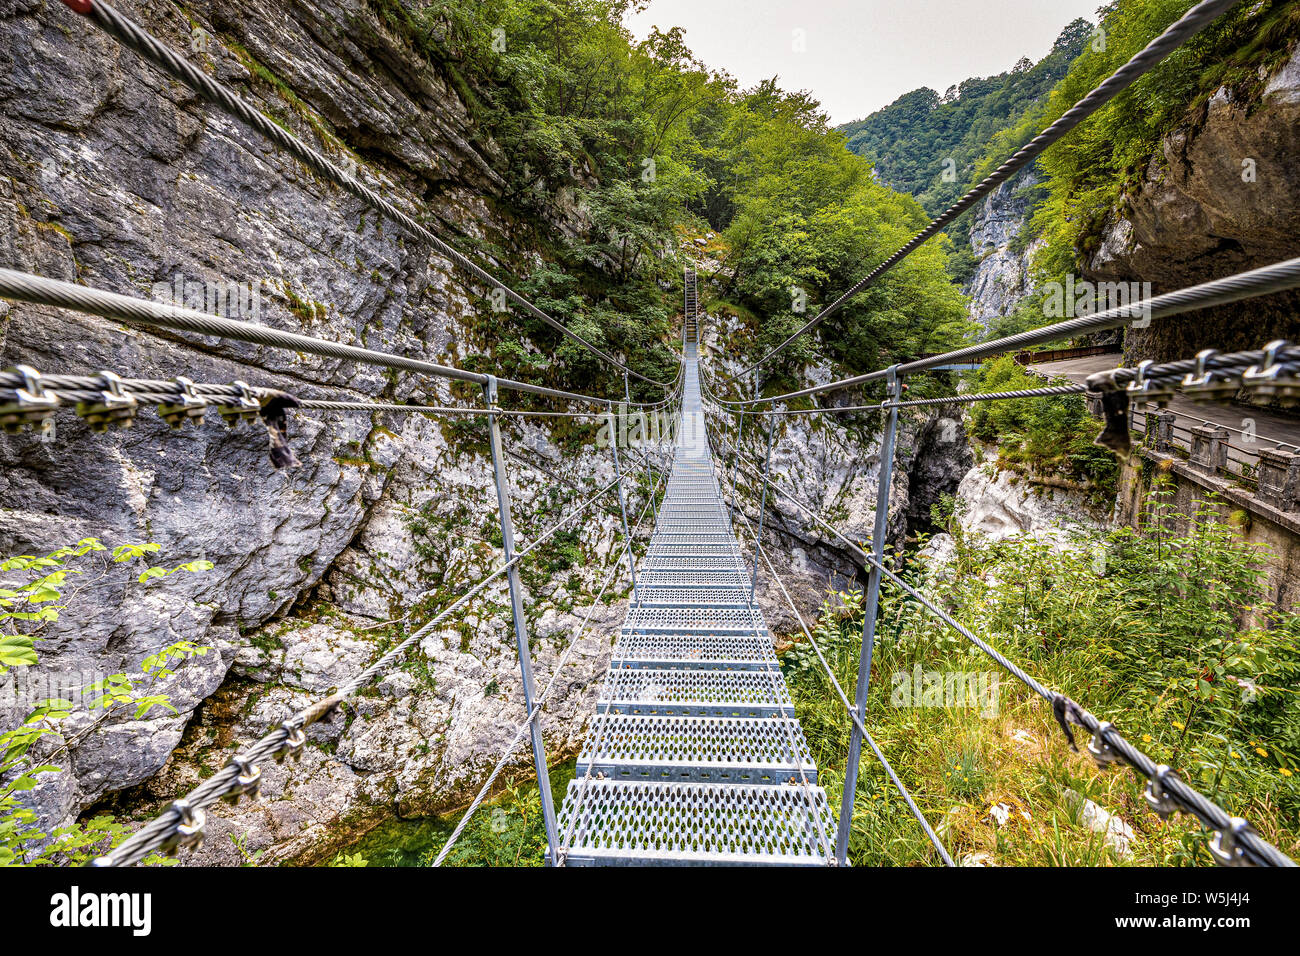 Italia Friuli Barcis Antiguo camino del Val Cellina - Puente del Himalaya - Parque Natural de la Dolomiti Friulane Foto de stock